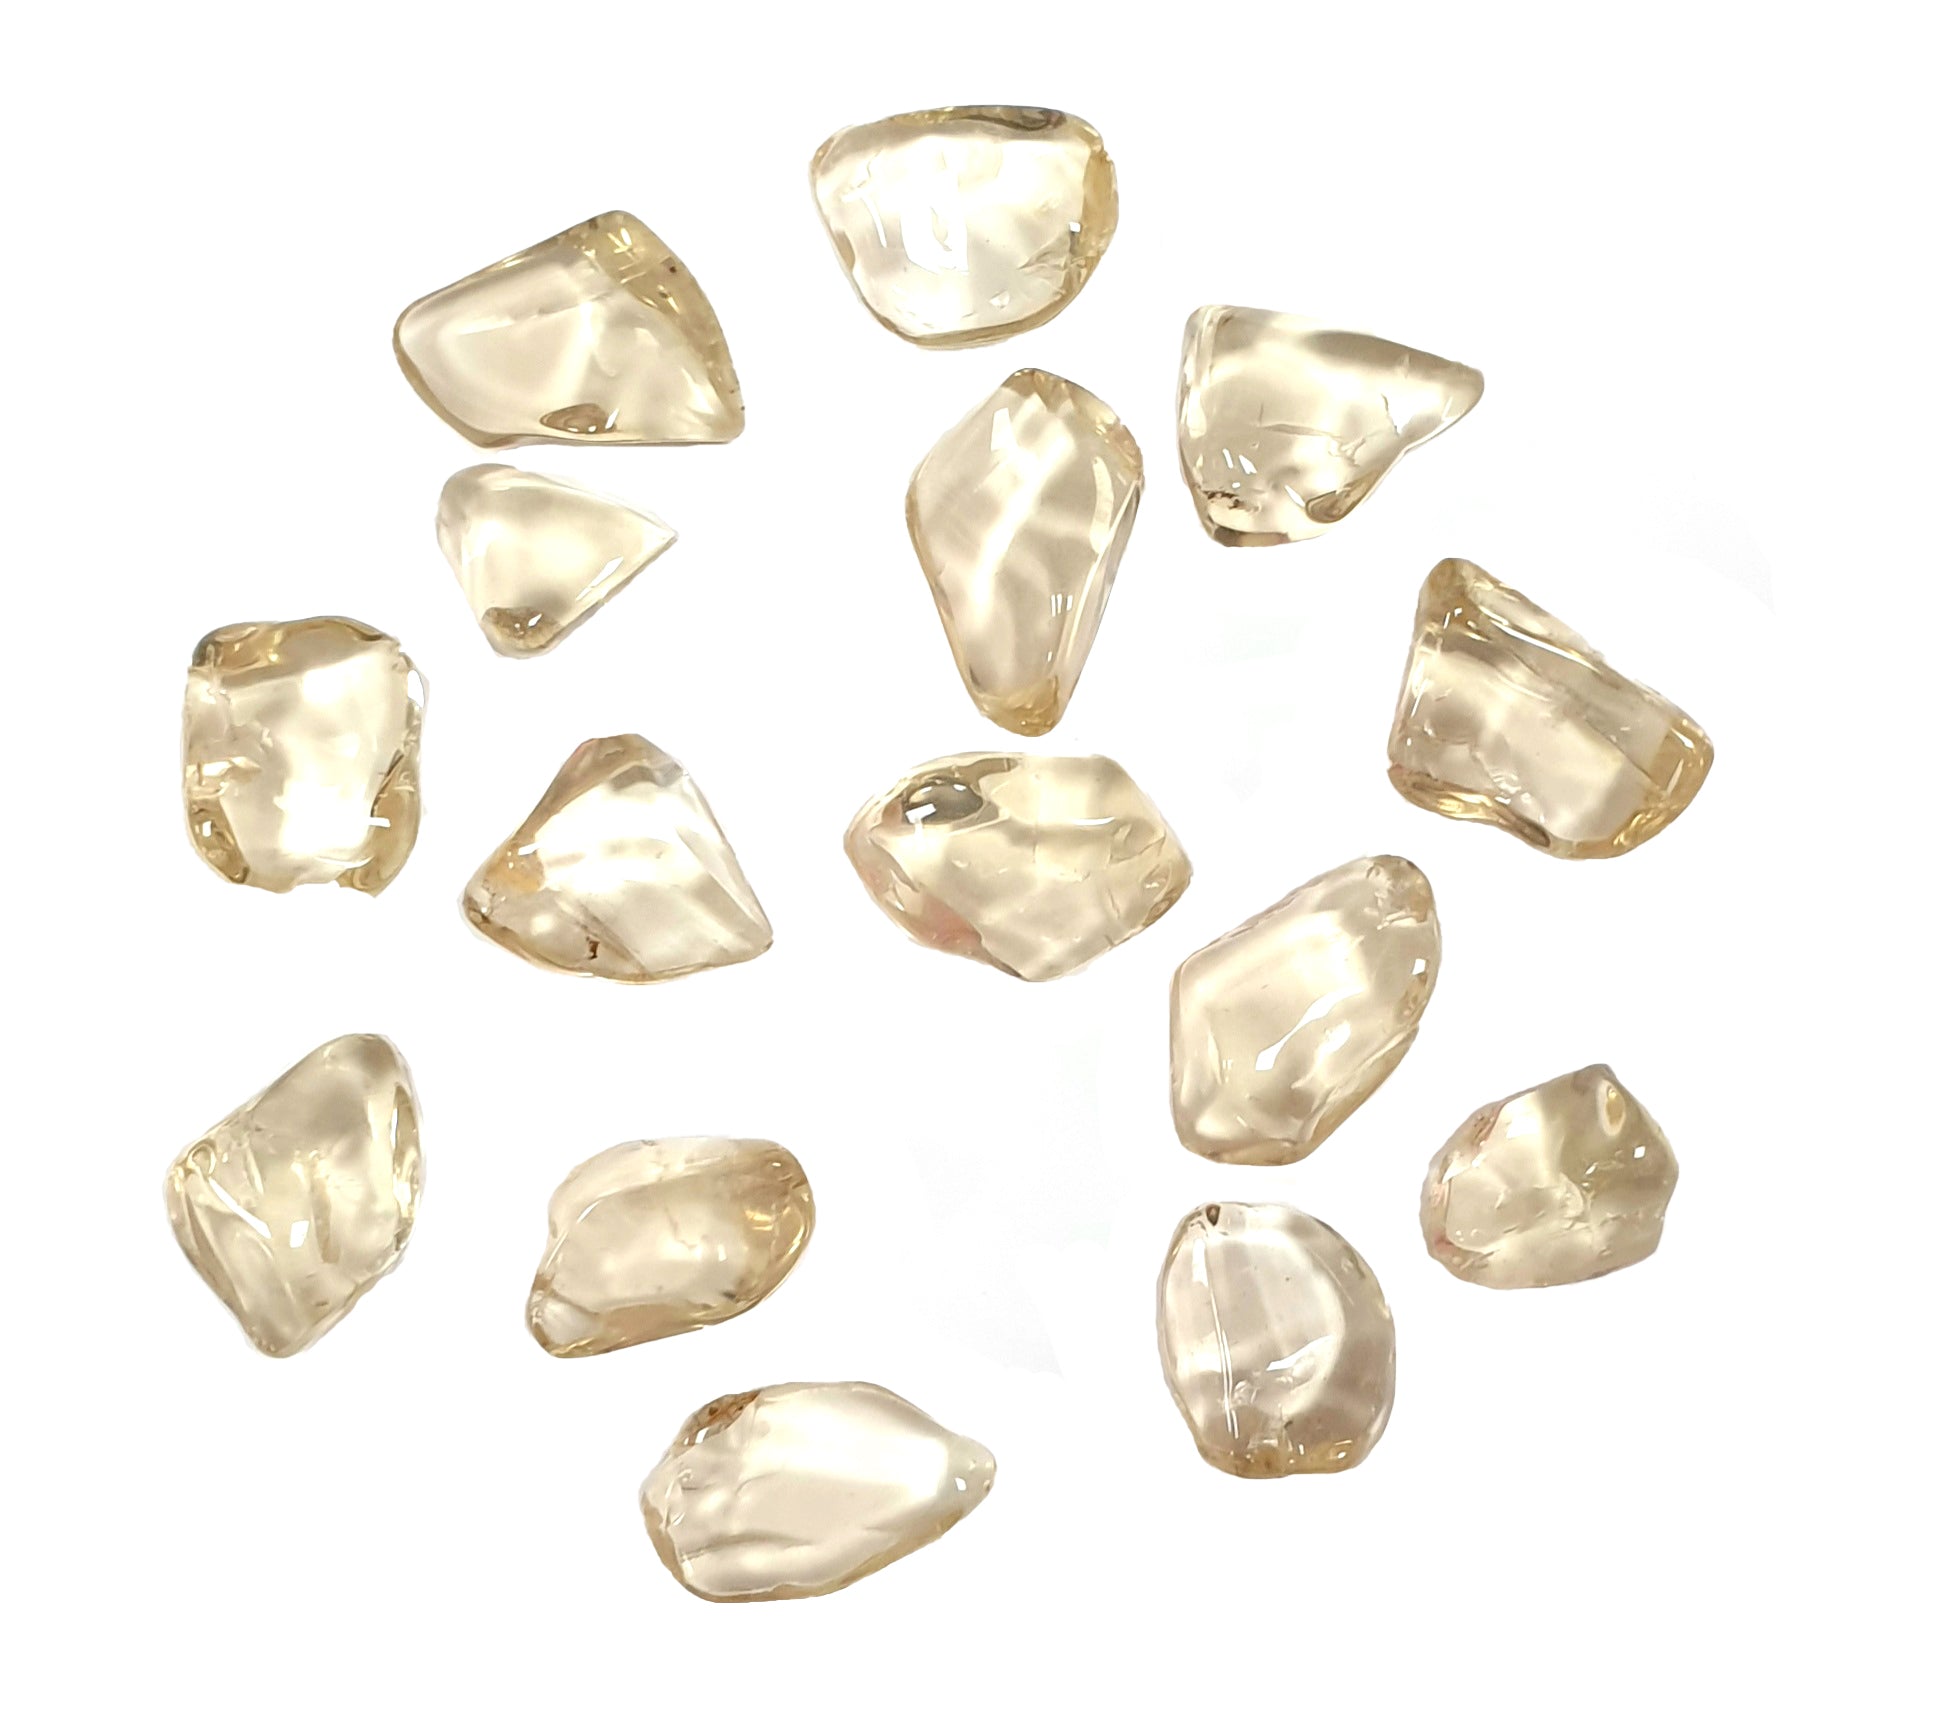 Golden Labradorite rare and unusual tumble stones. 